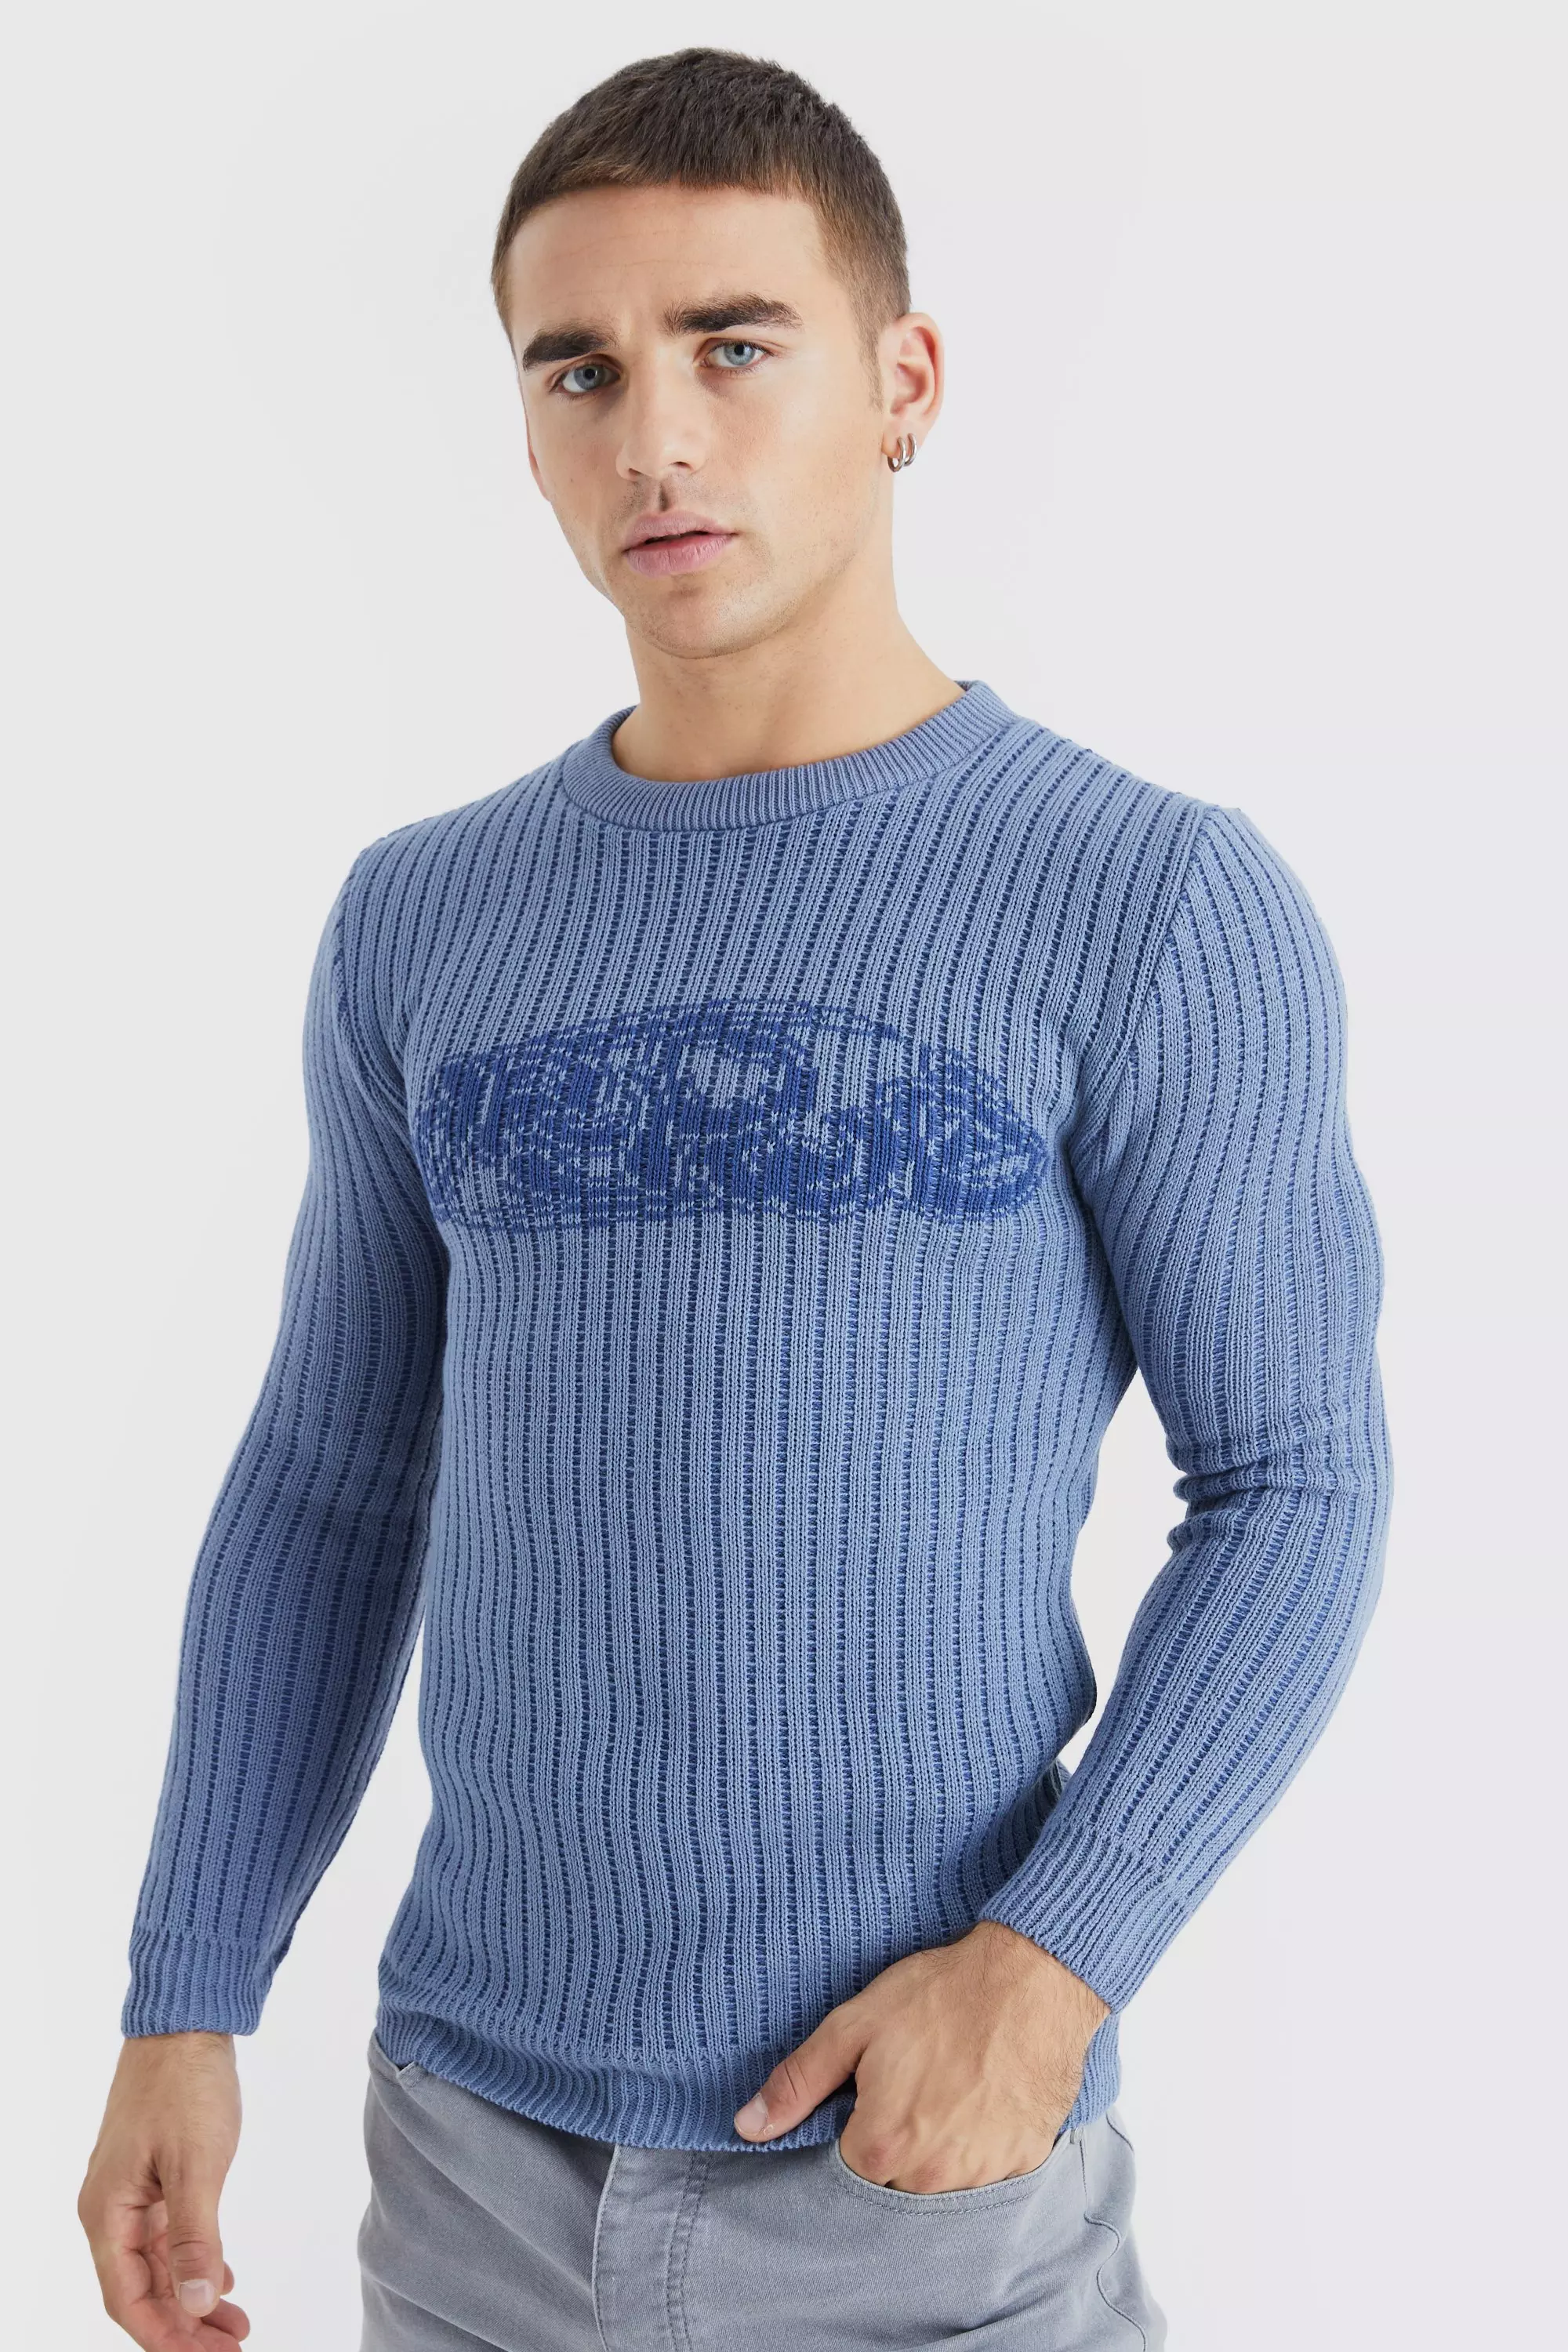 Blue Muscle Fit 2 Tone Rib Worldwide Sweater